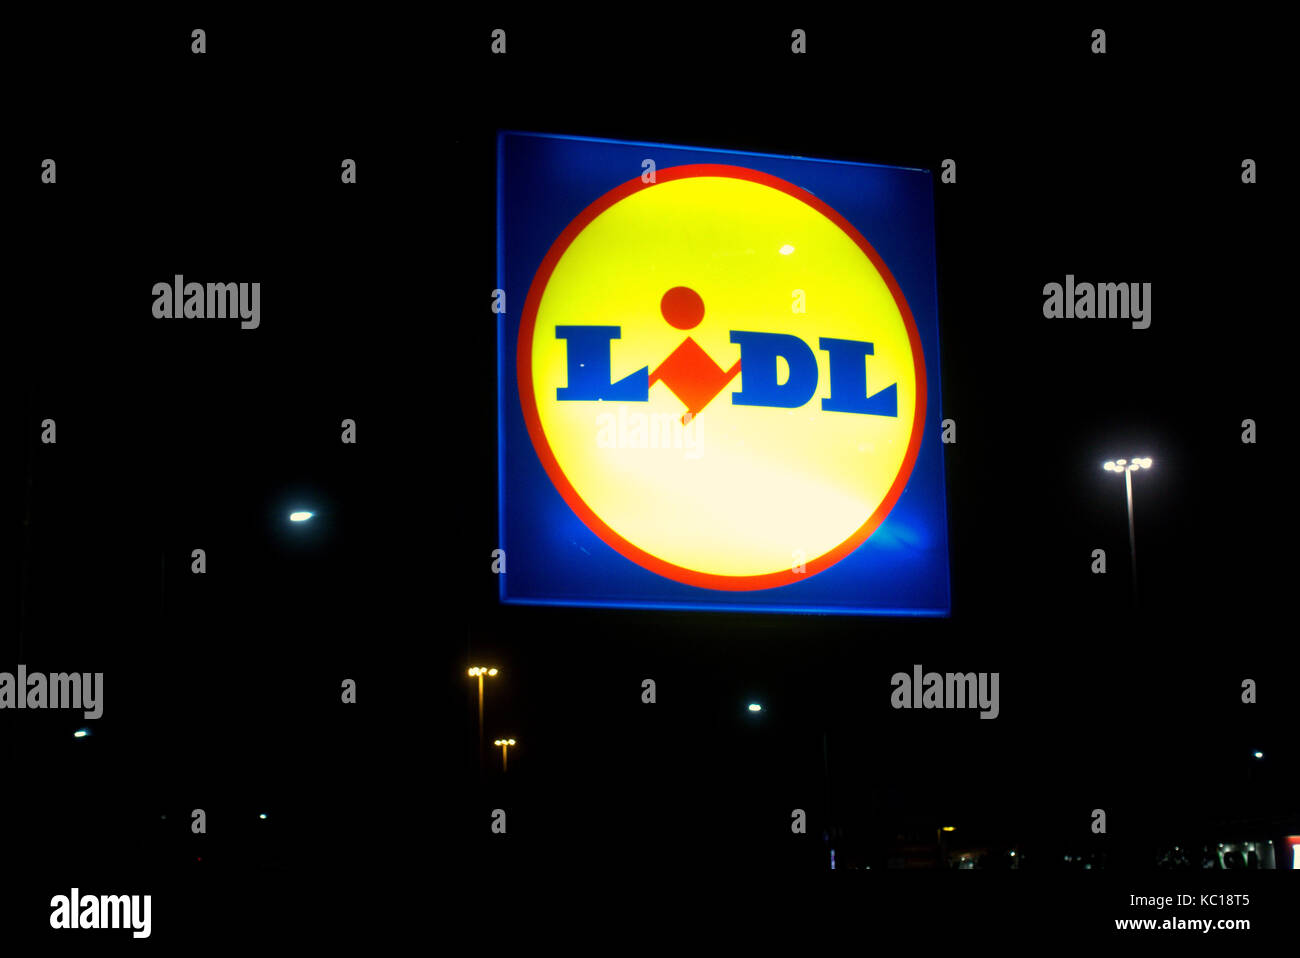 lidl supermarket sign nighttime after dark Stock Photo